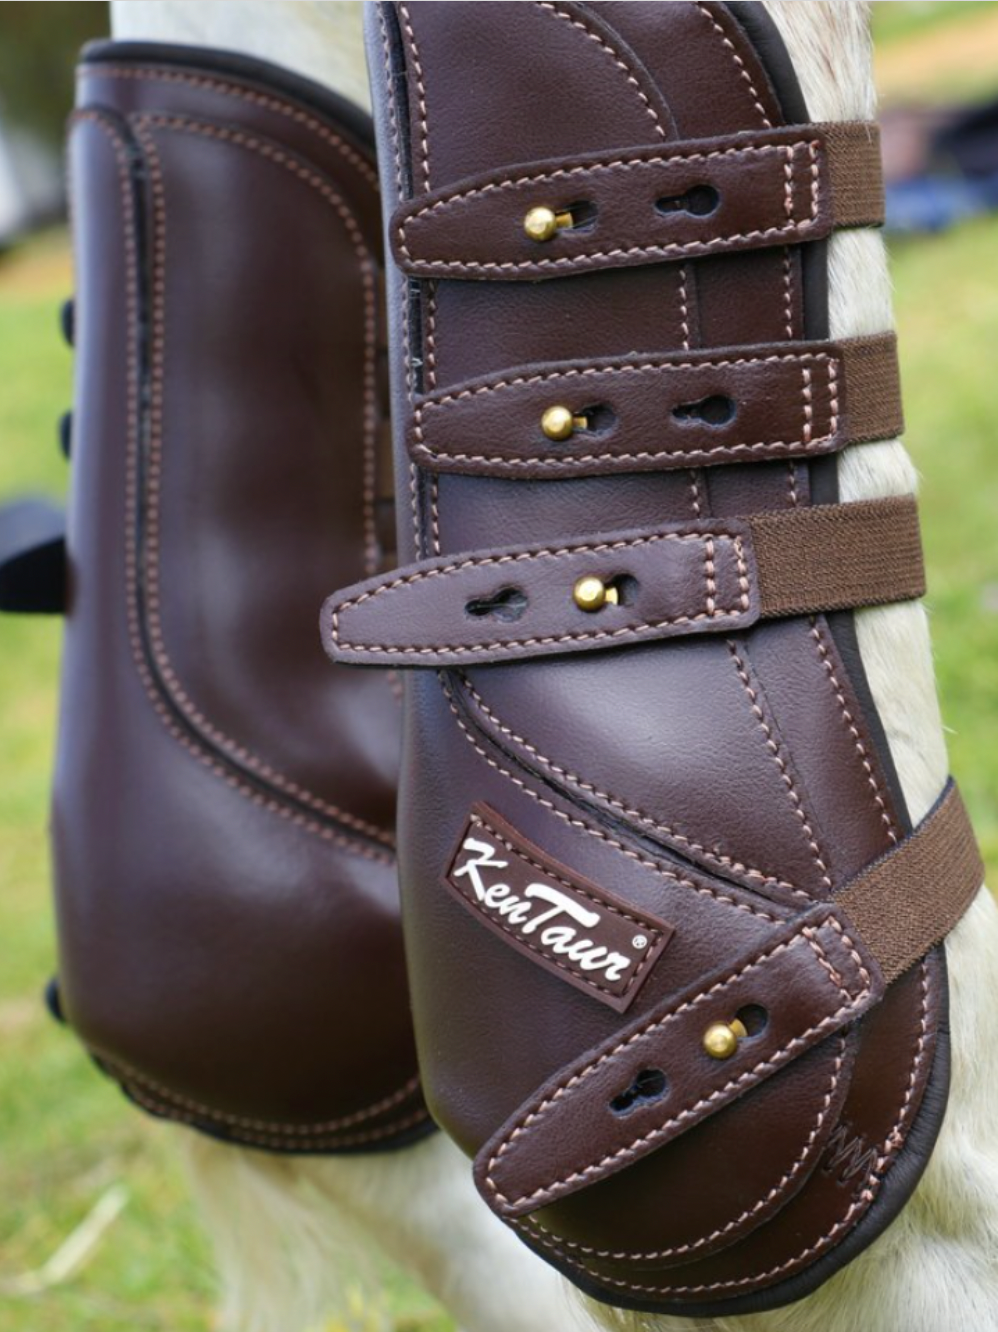 KENTAUR - Cambridge Full Leather Front Boot